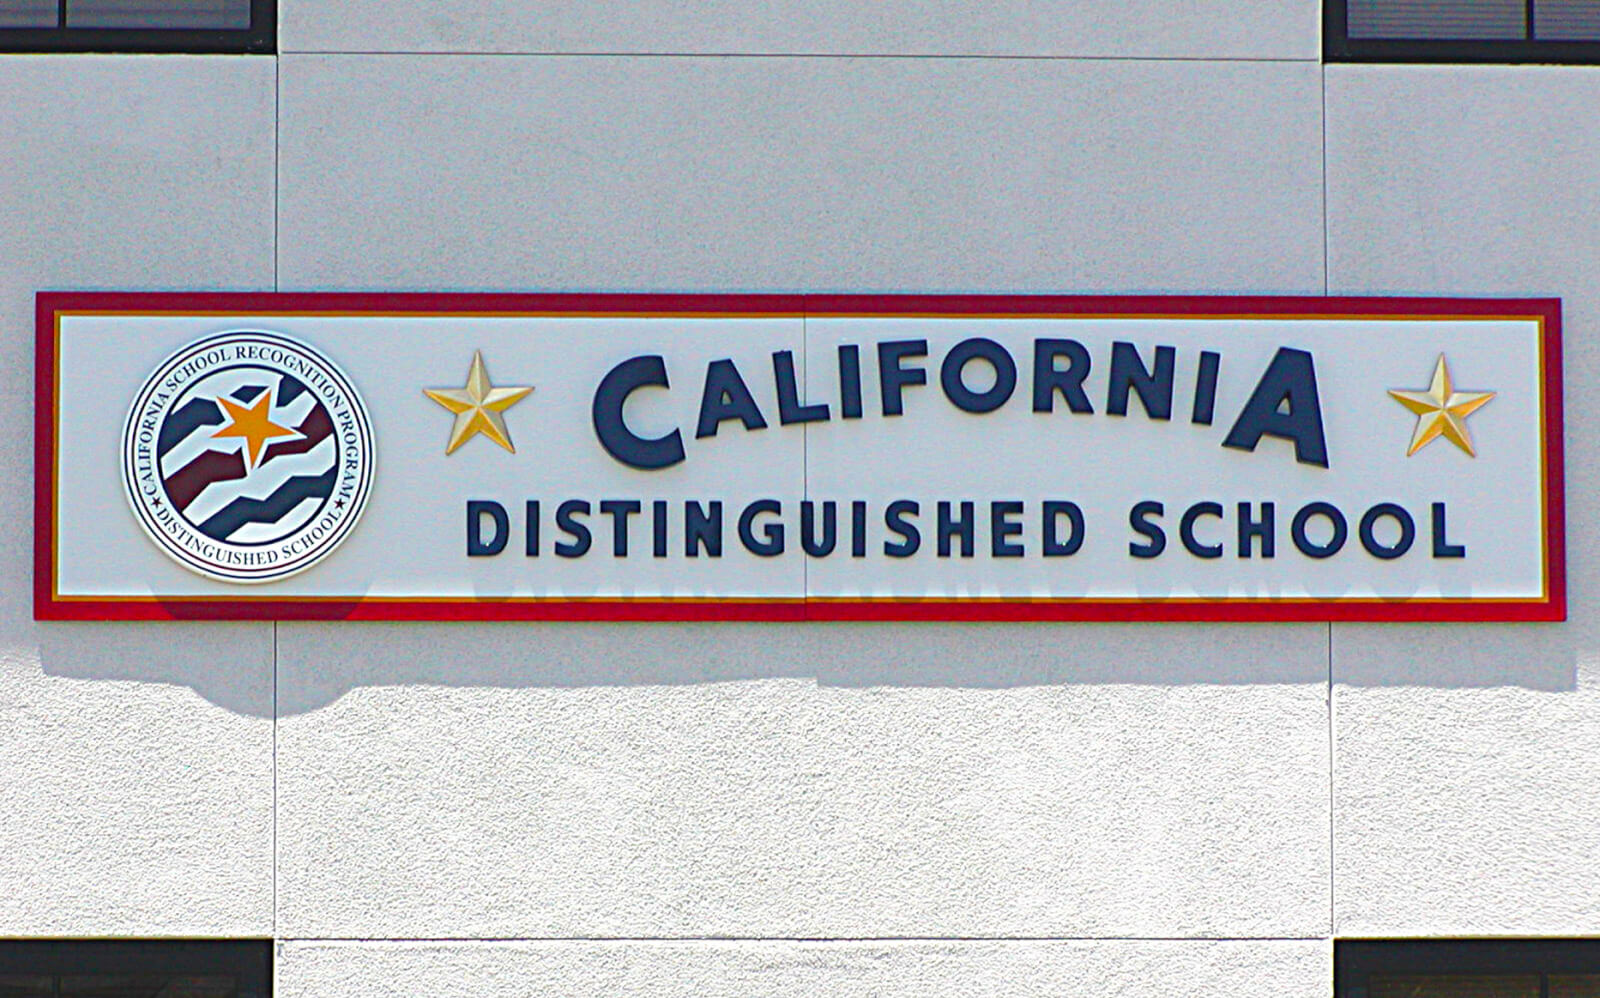 San Jose school signs canoas elementary california distinguished